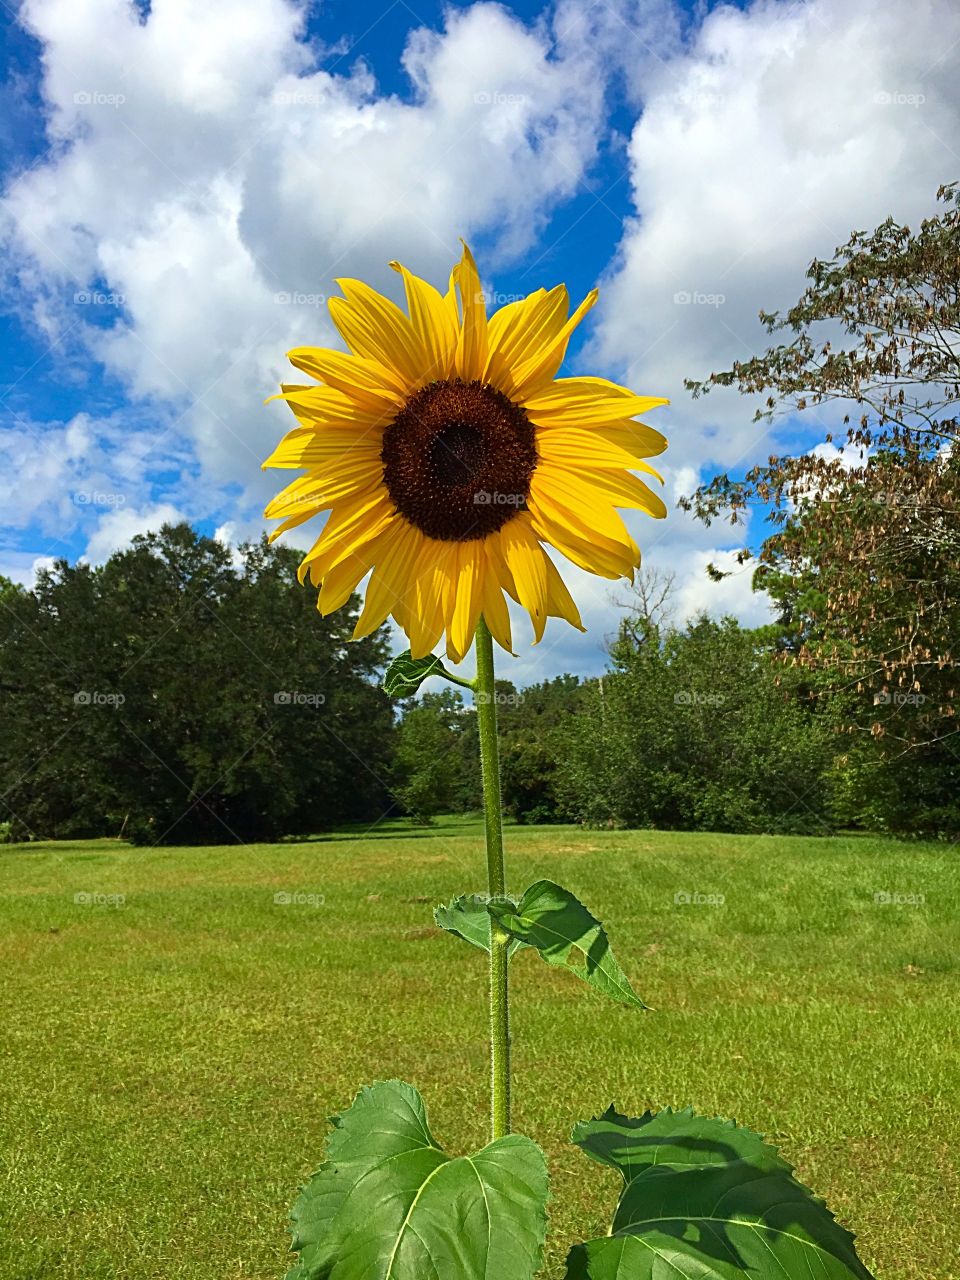 Sunflower from local Community Garden 